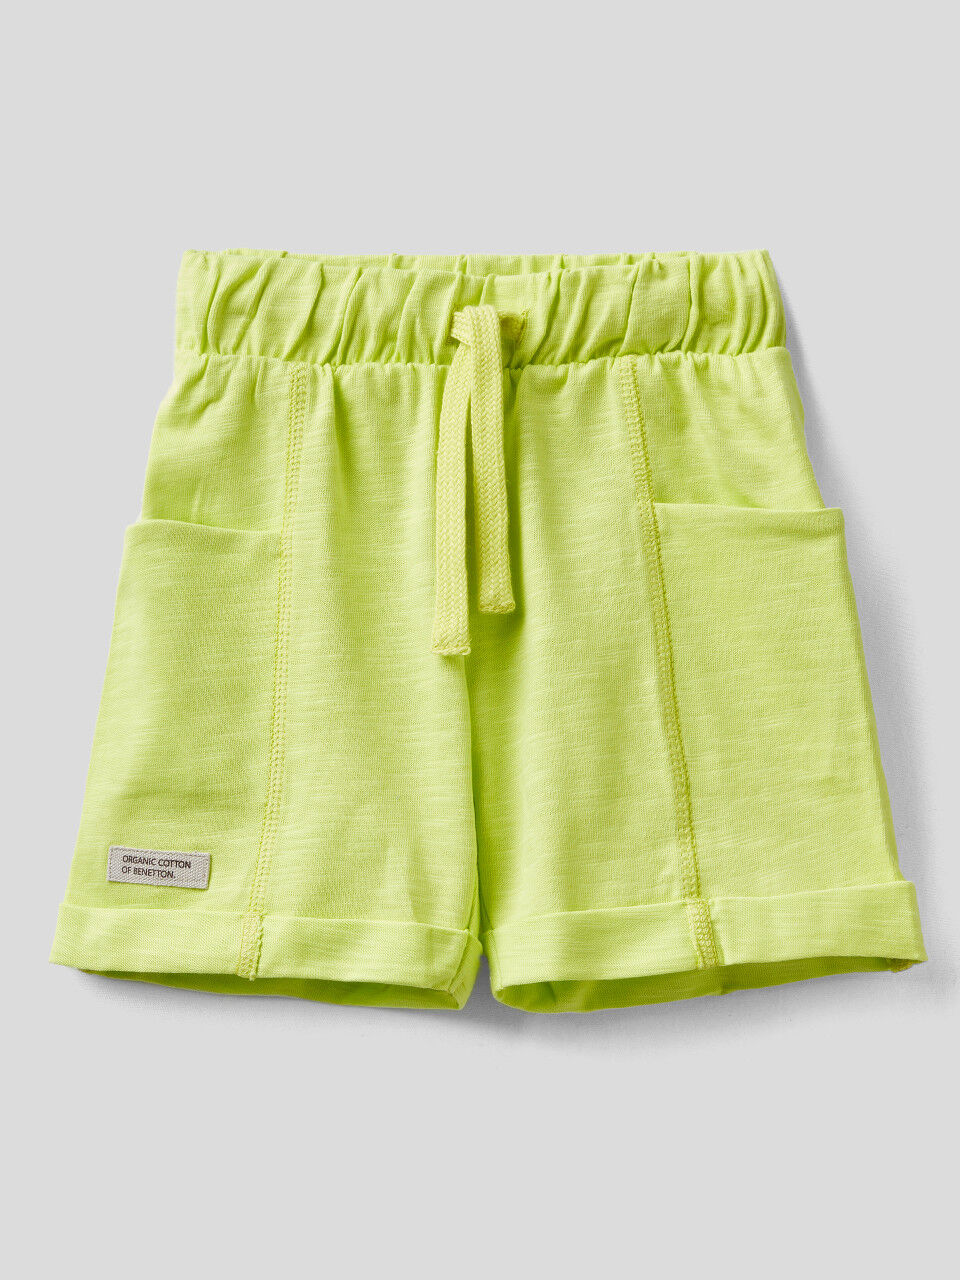 Shorts in organic cotton